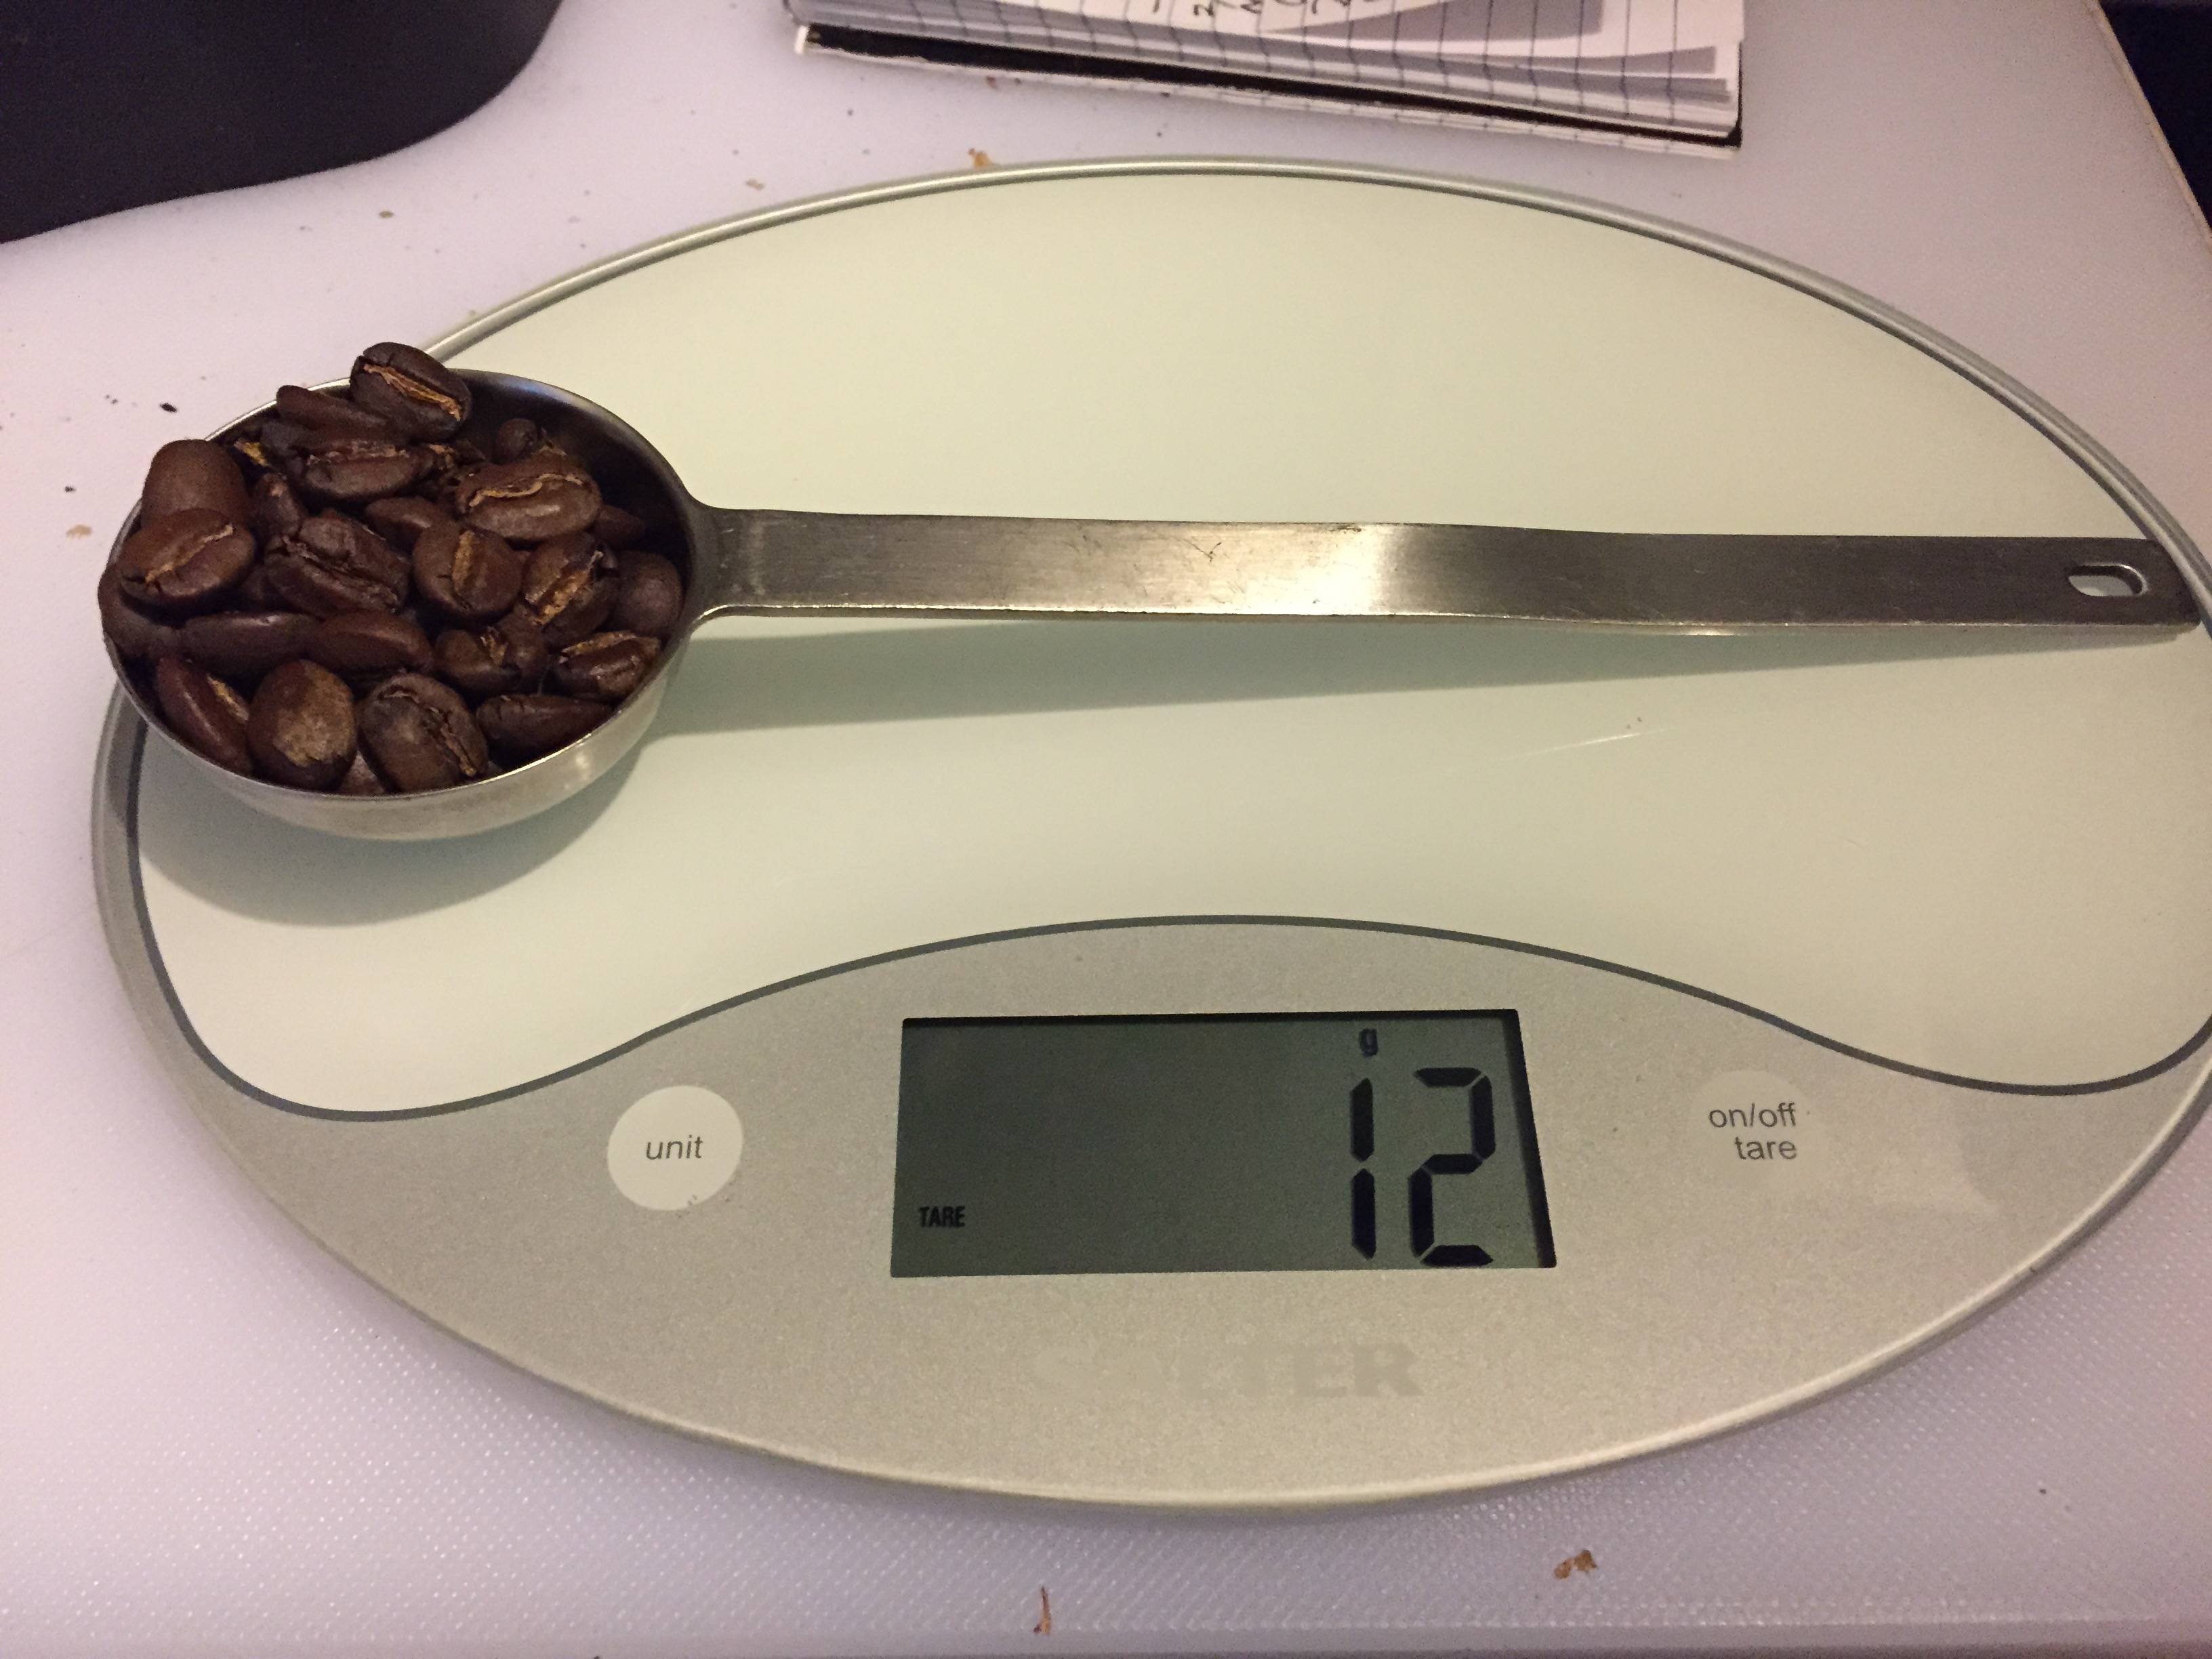 2Tbsp scoop of beans weighing 12g